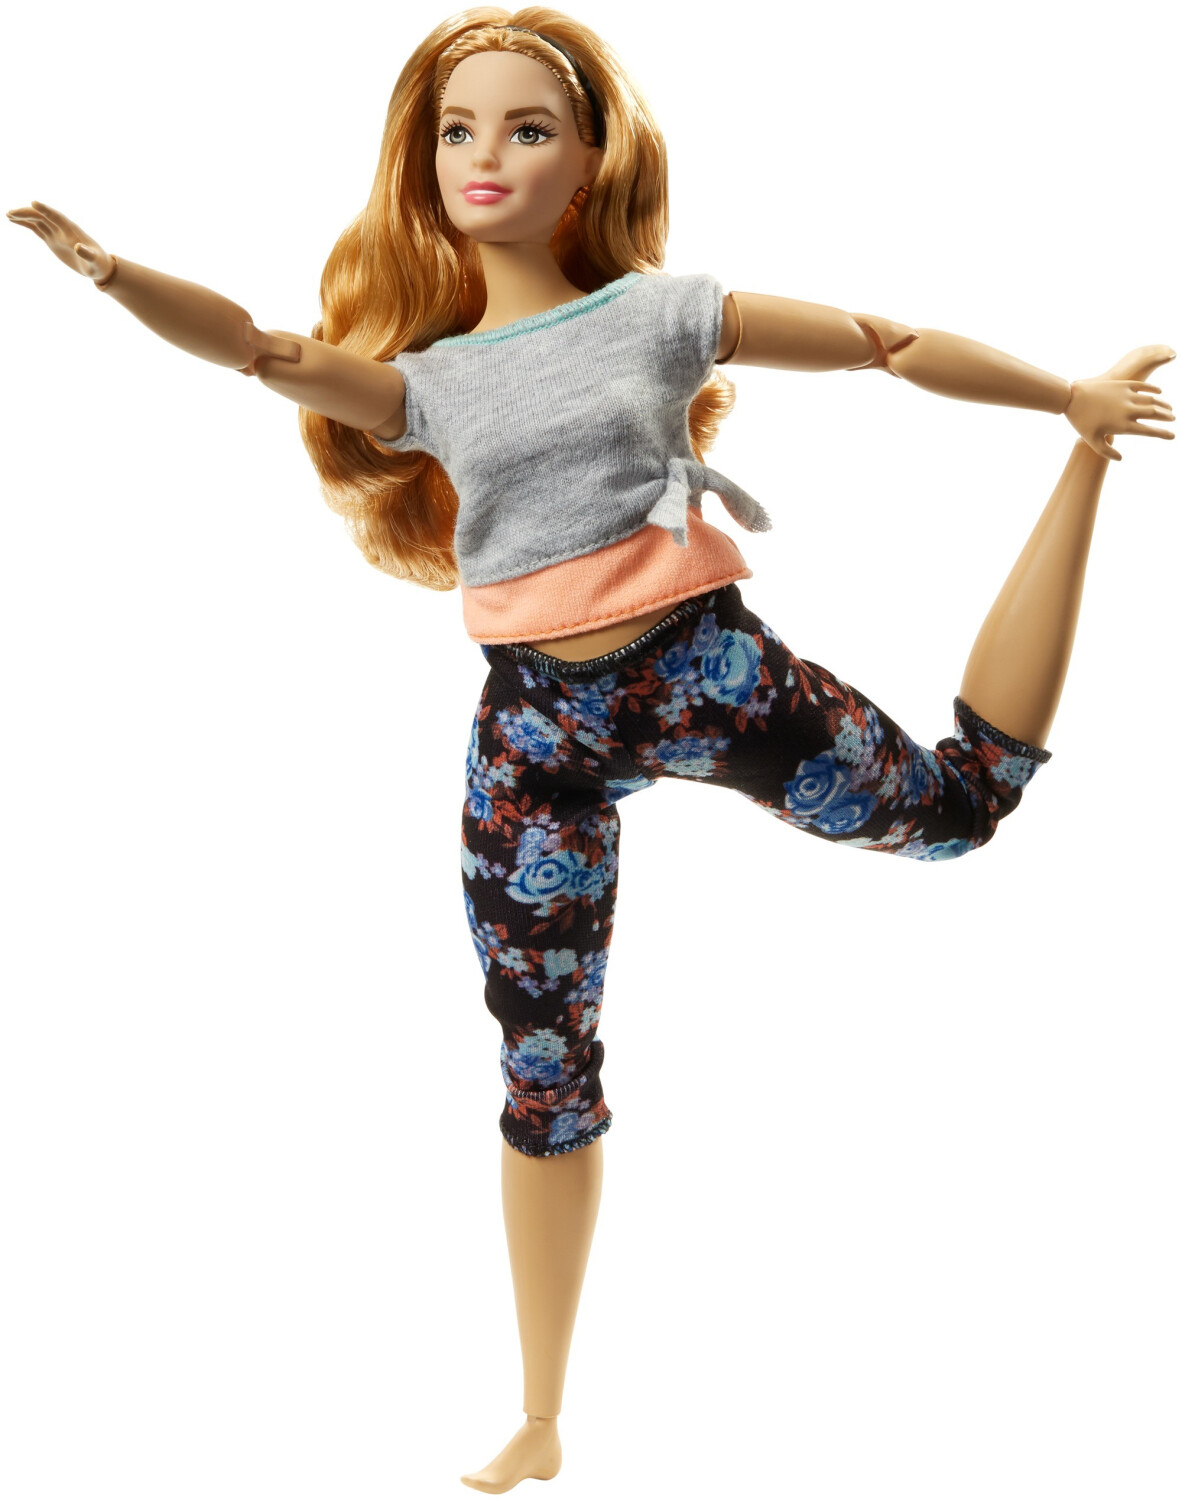 Barbie Made to Move - Auburn Hair